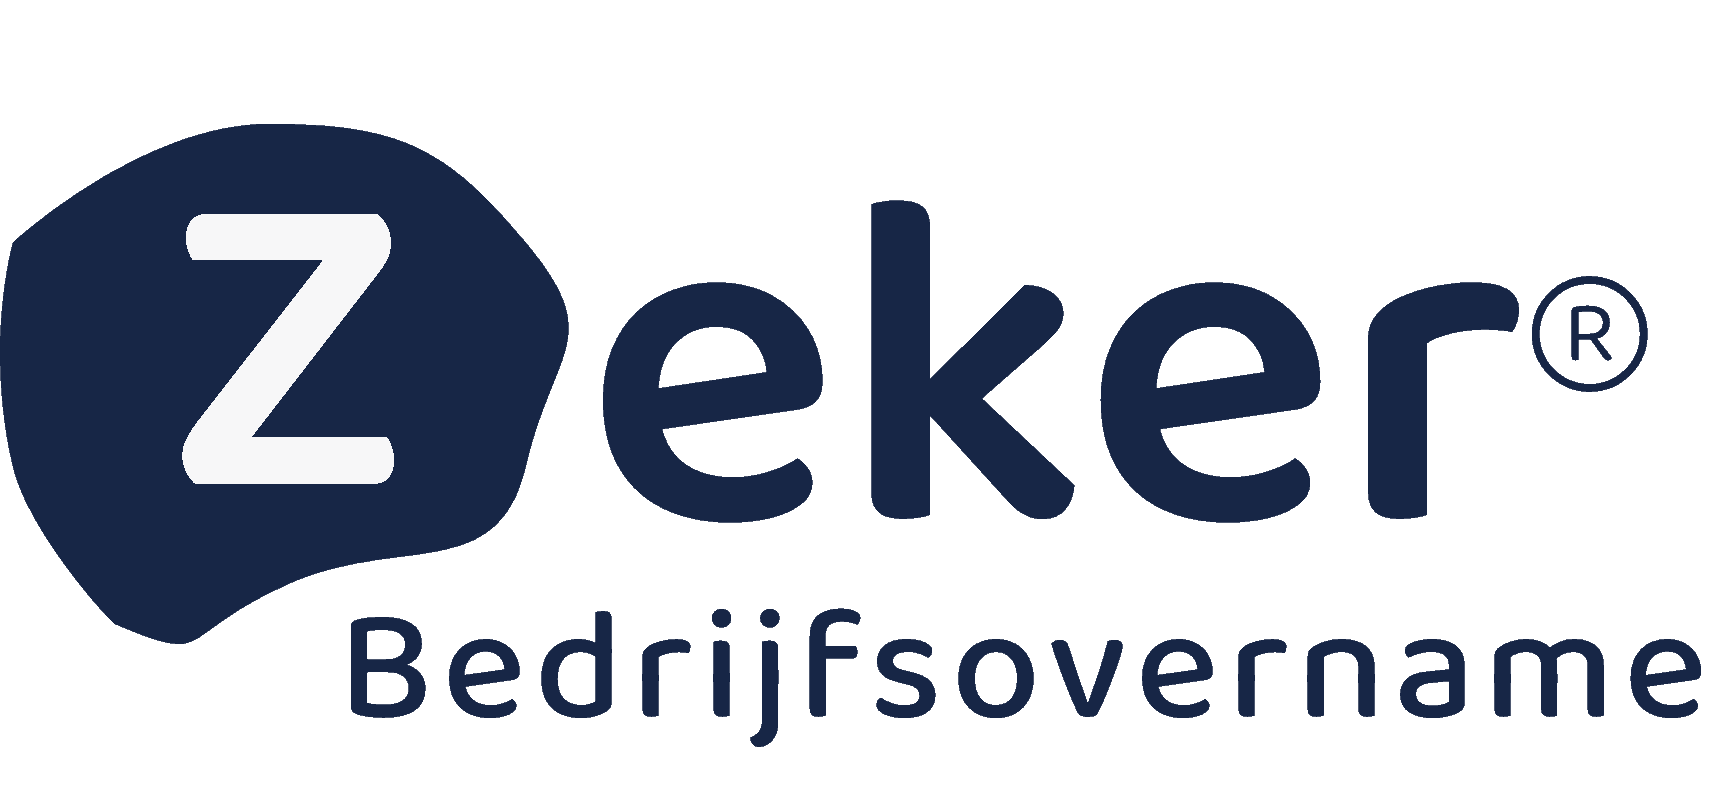 Bedrijf kopen Zeker Bedrijfsovername logo new